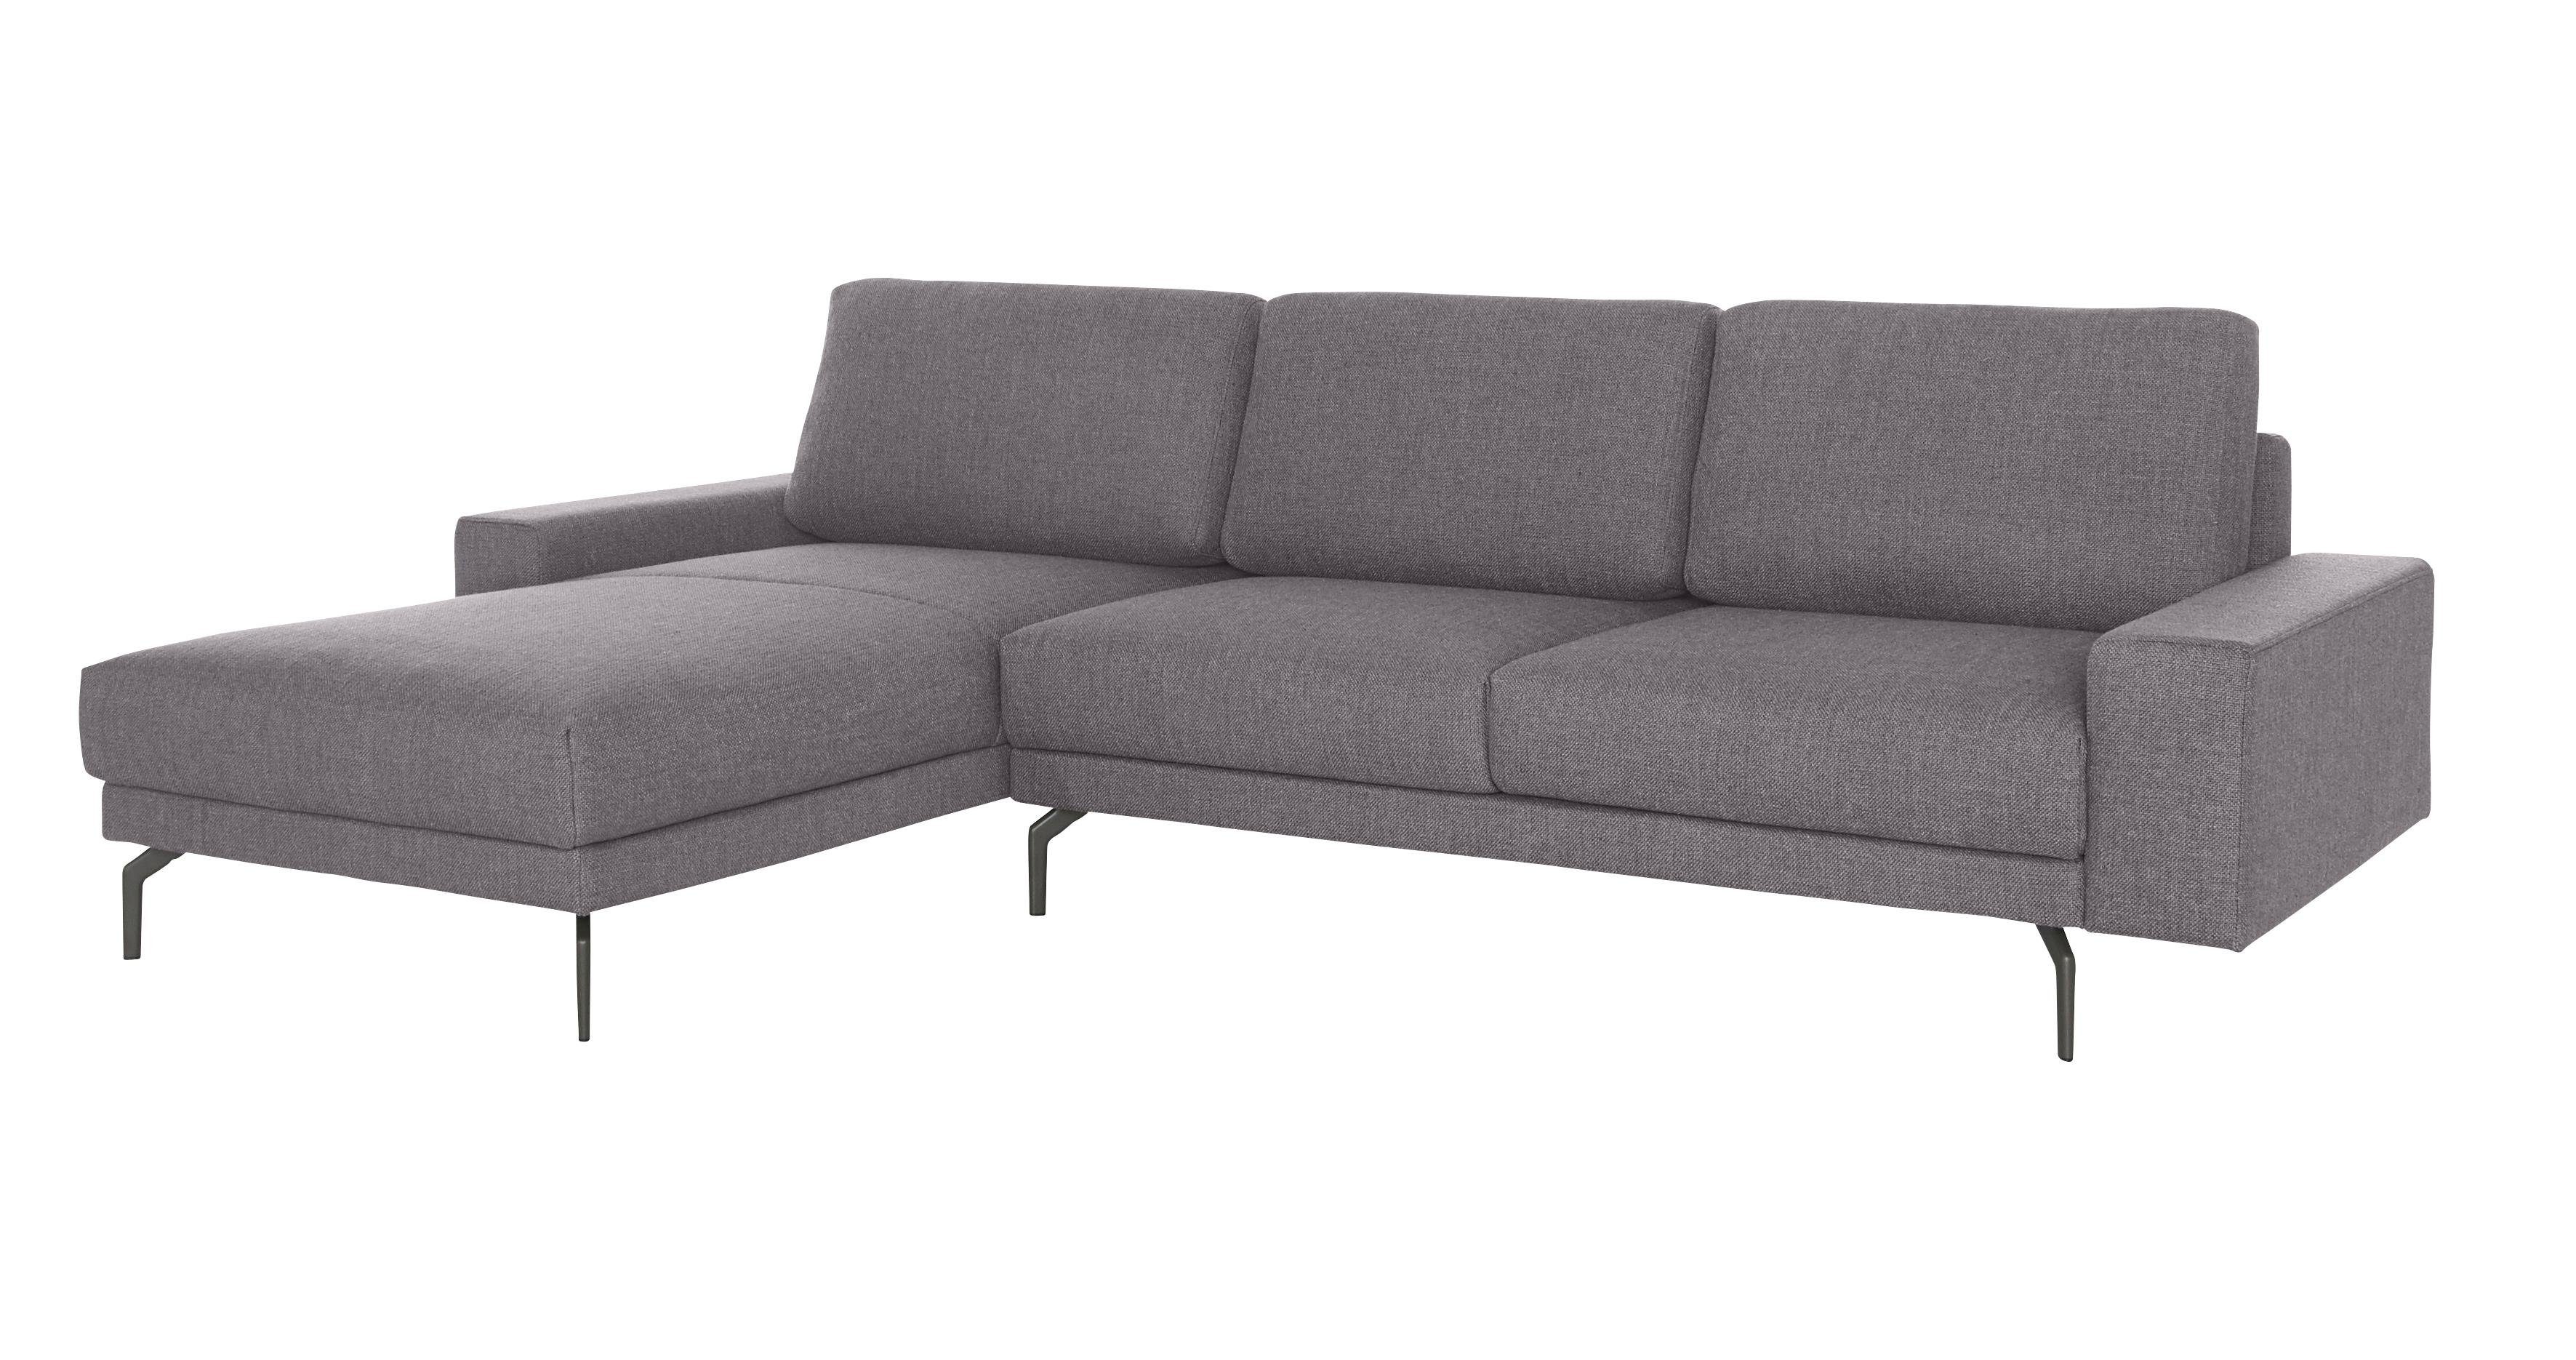 hs.450, cm hülsta und Ecksofa Breite in 294 niedrig, umbragrau, Armlehne sofa Alugussfüße breit